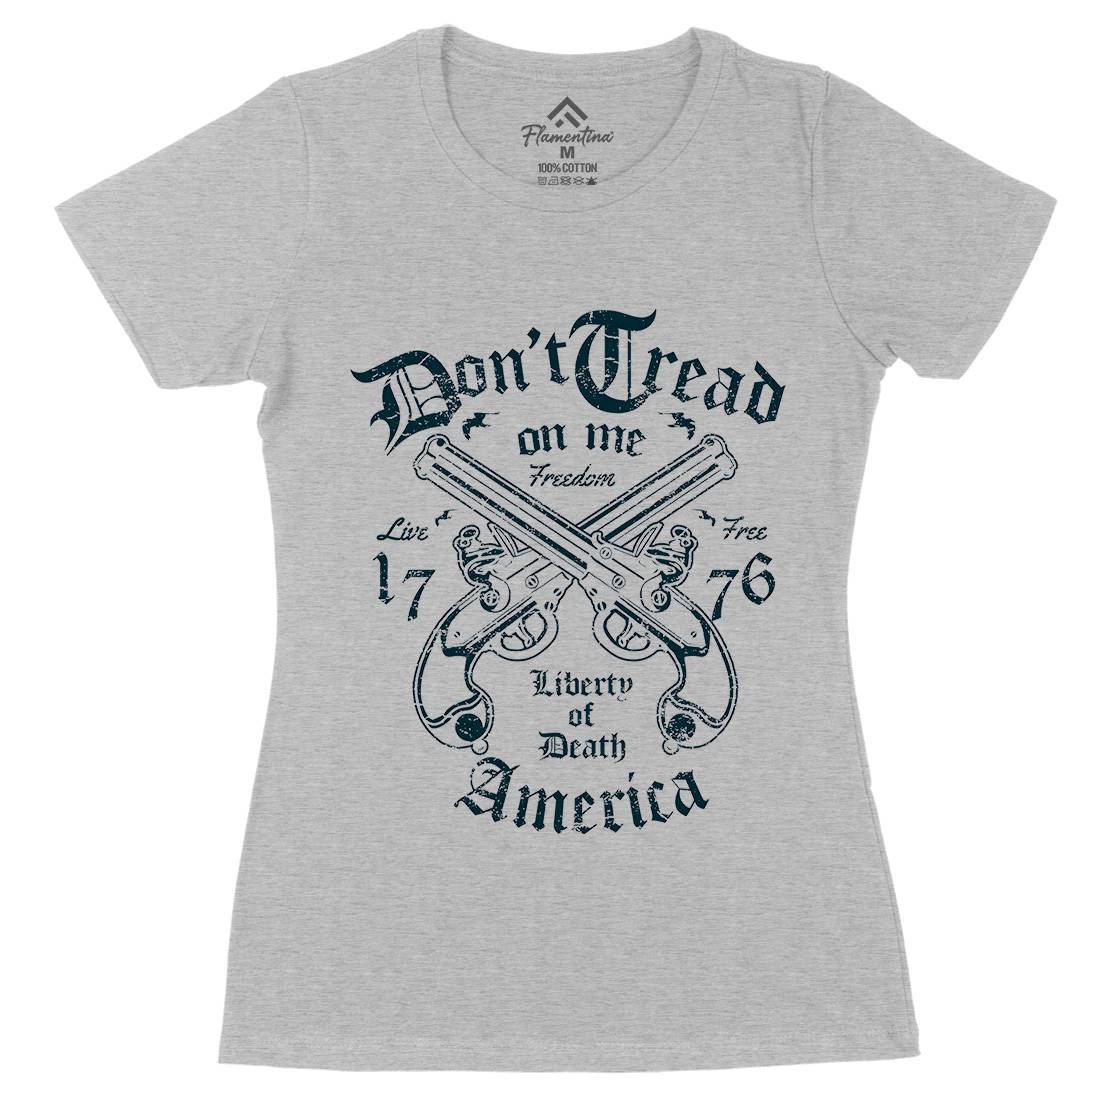 Liberty Of Death Womens Organic Crew Neck T-Shirt American A084